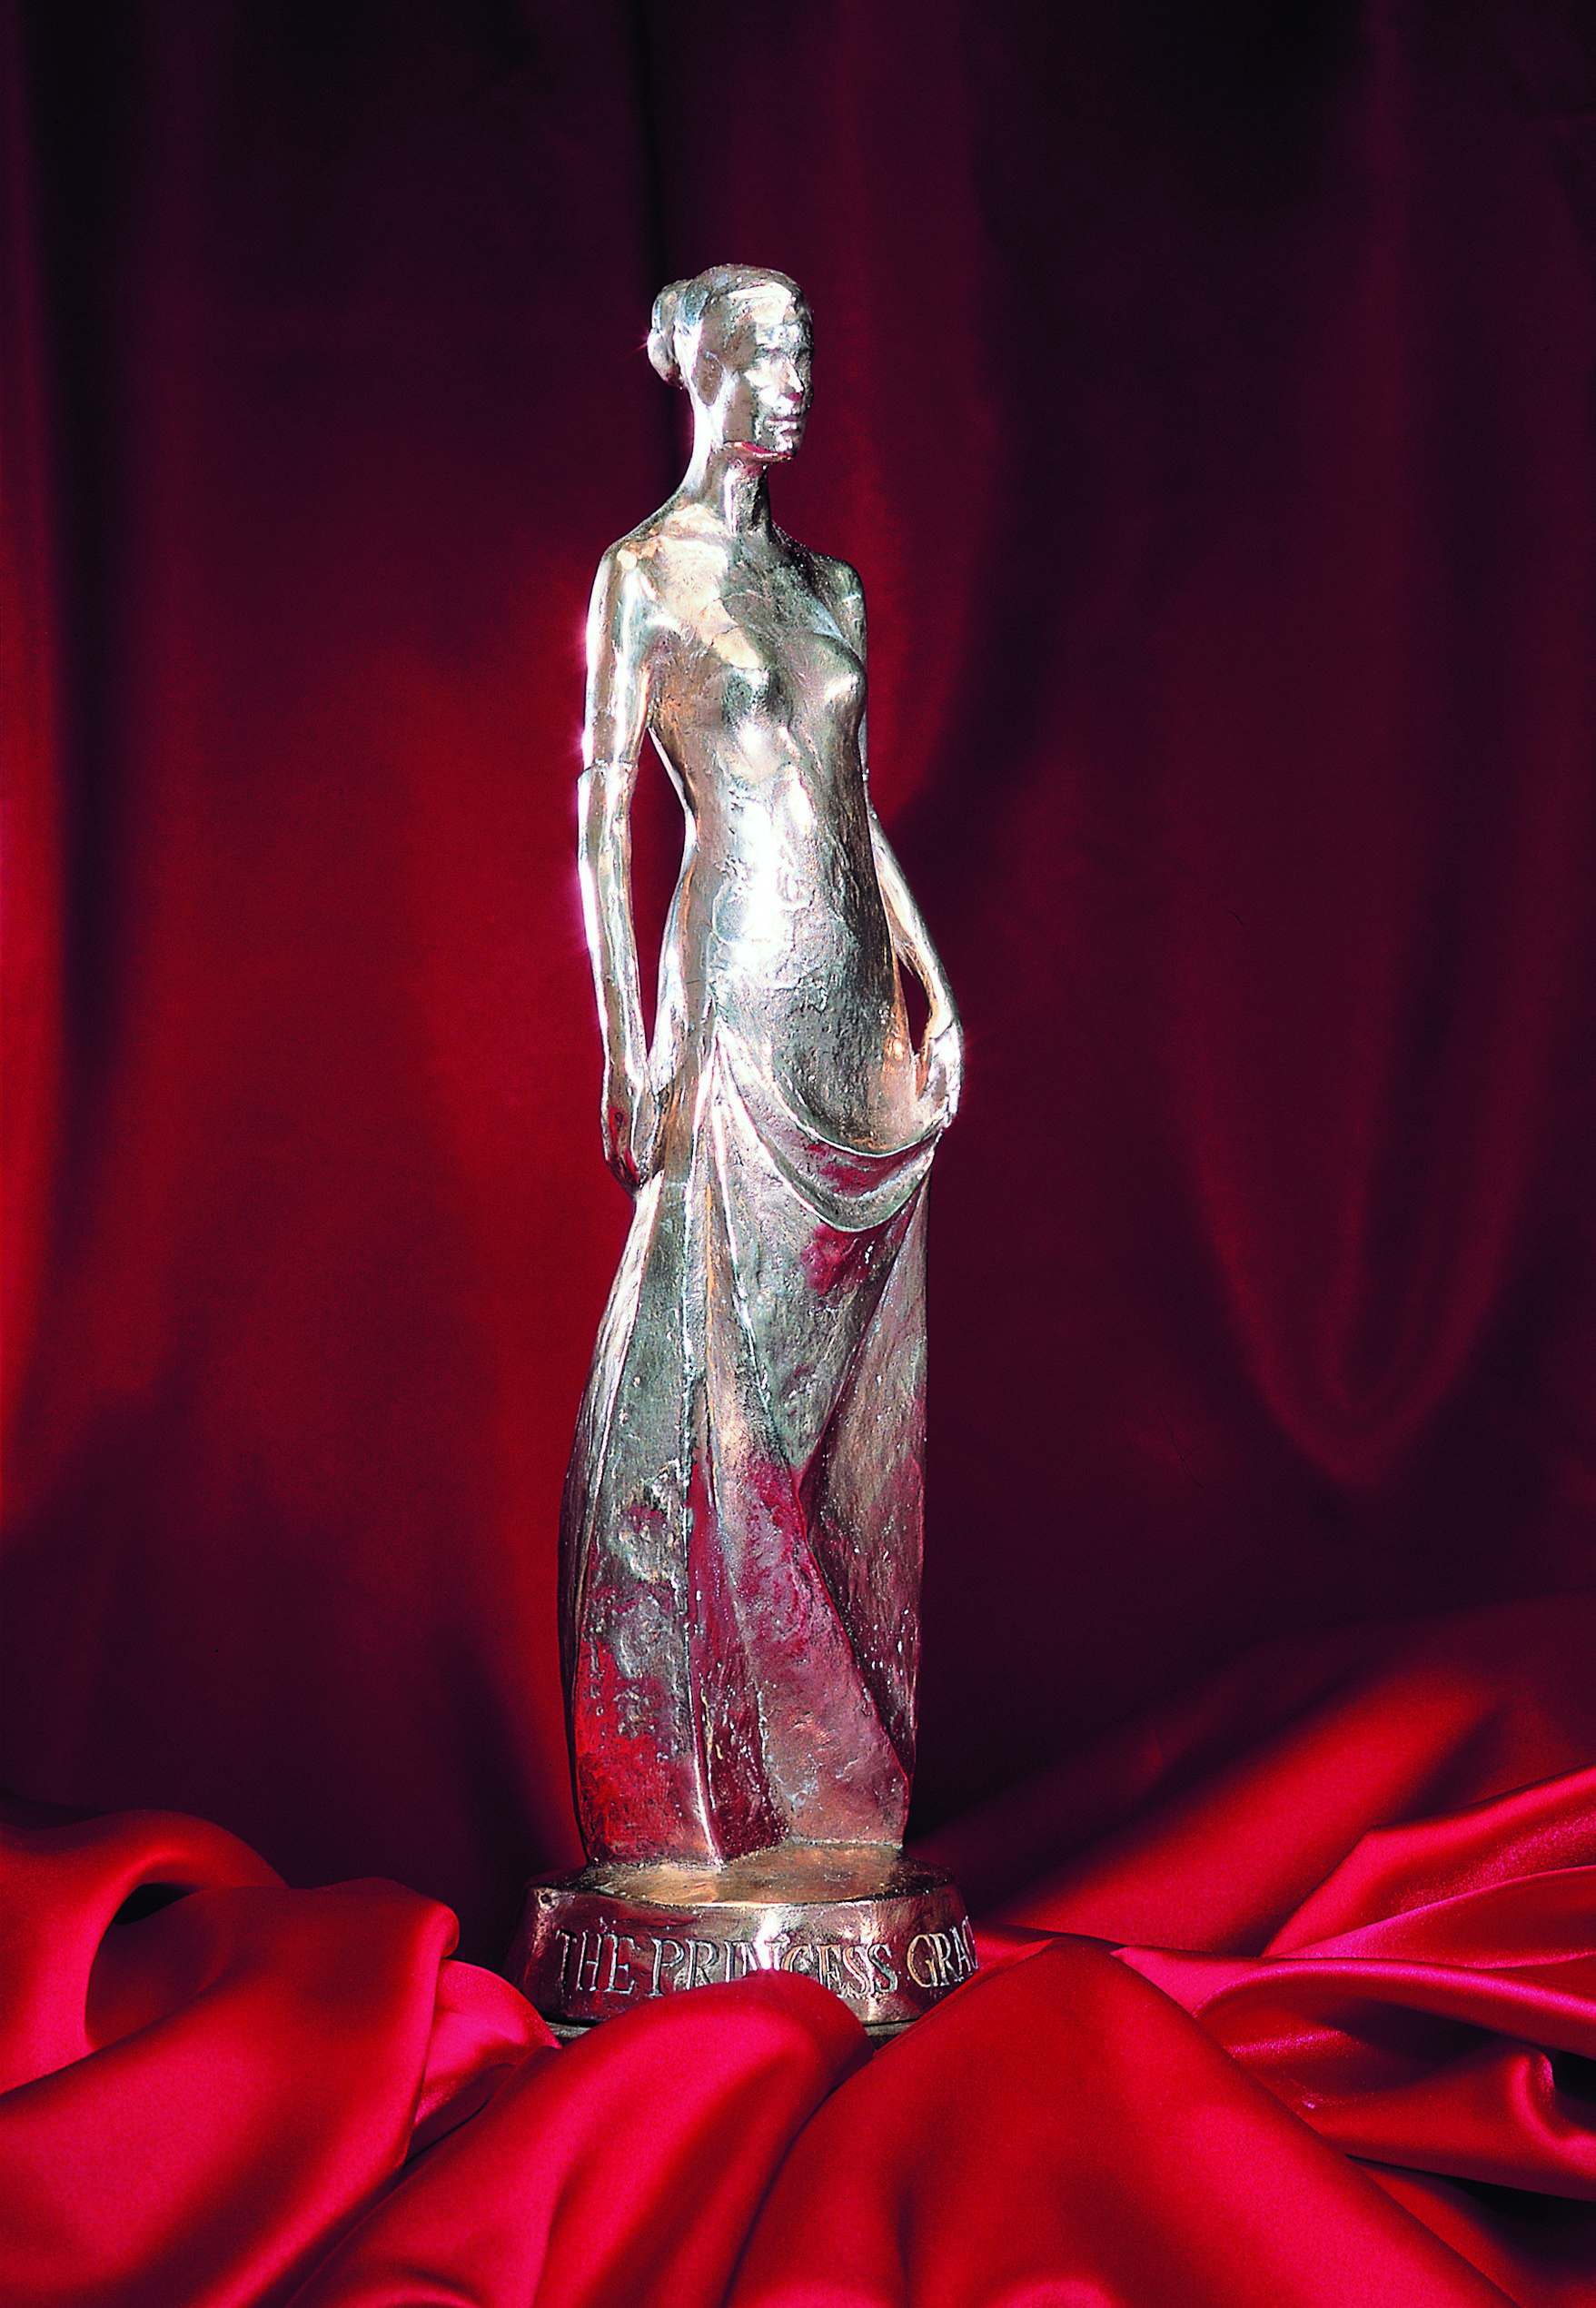 1 The Princess Grace Statue Award, CKees Verkade